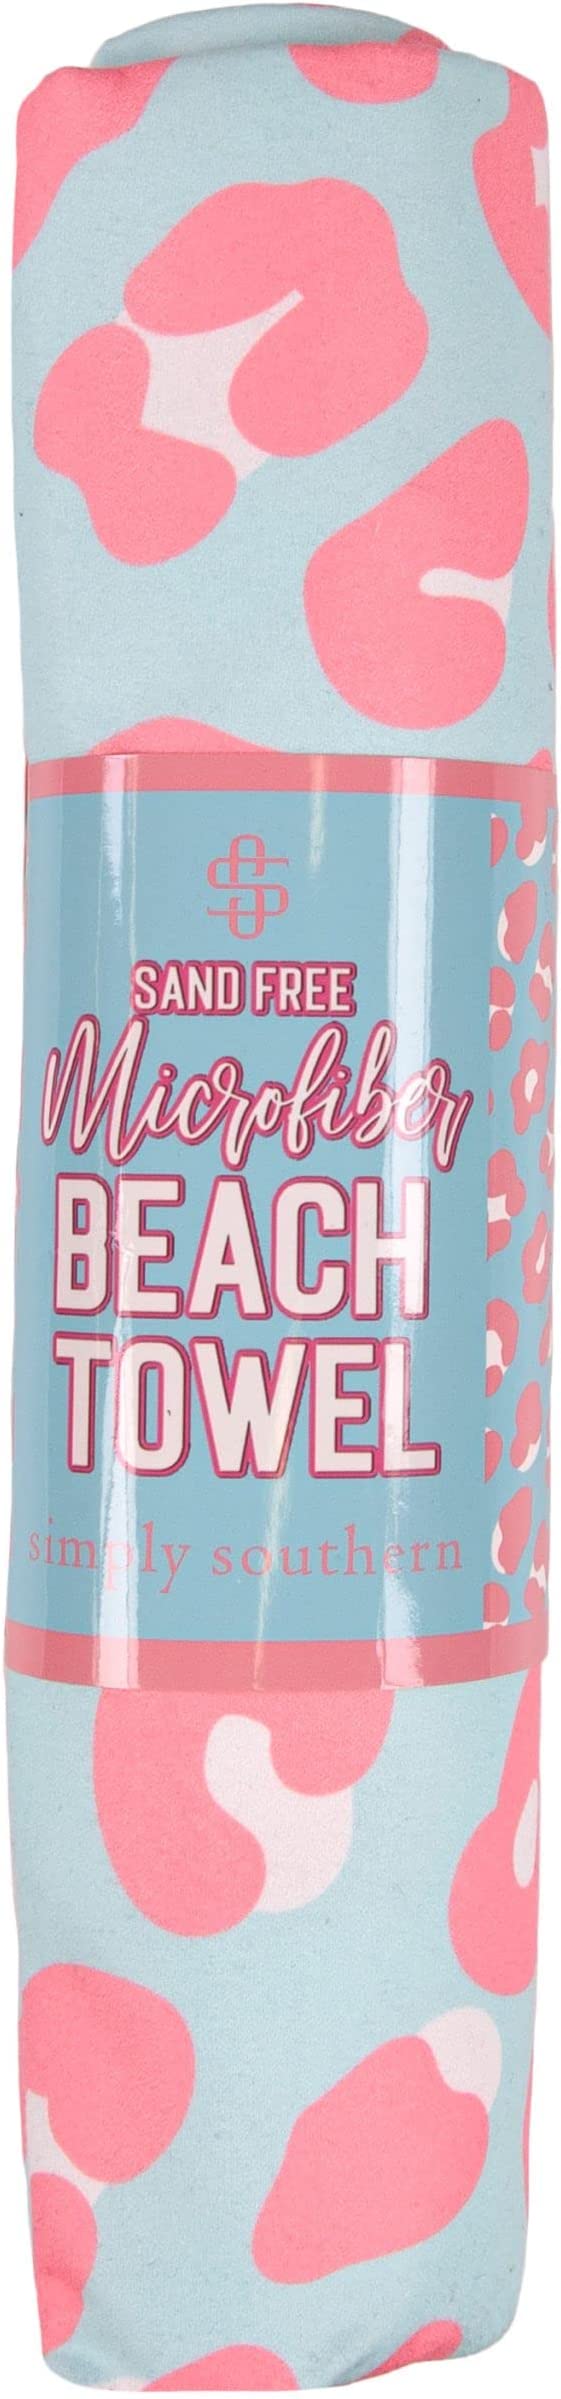 Simply Southern Microfiber Beach Towel Leo